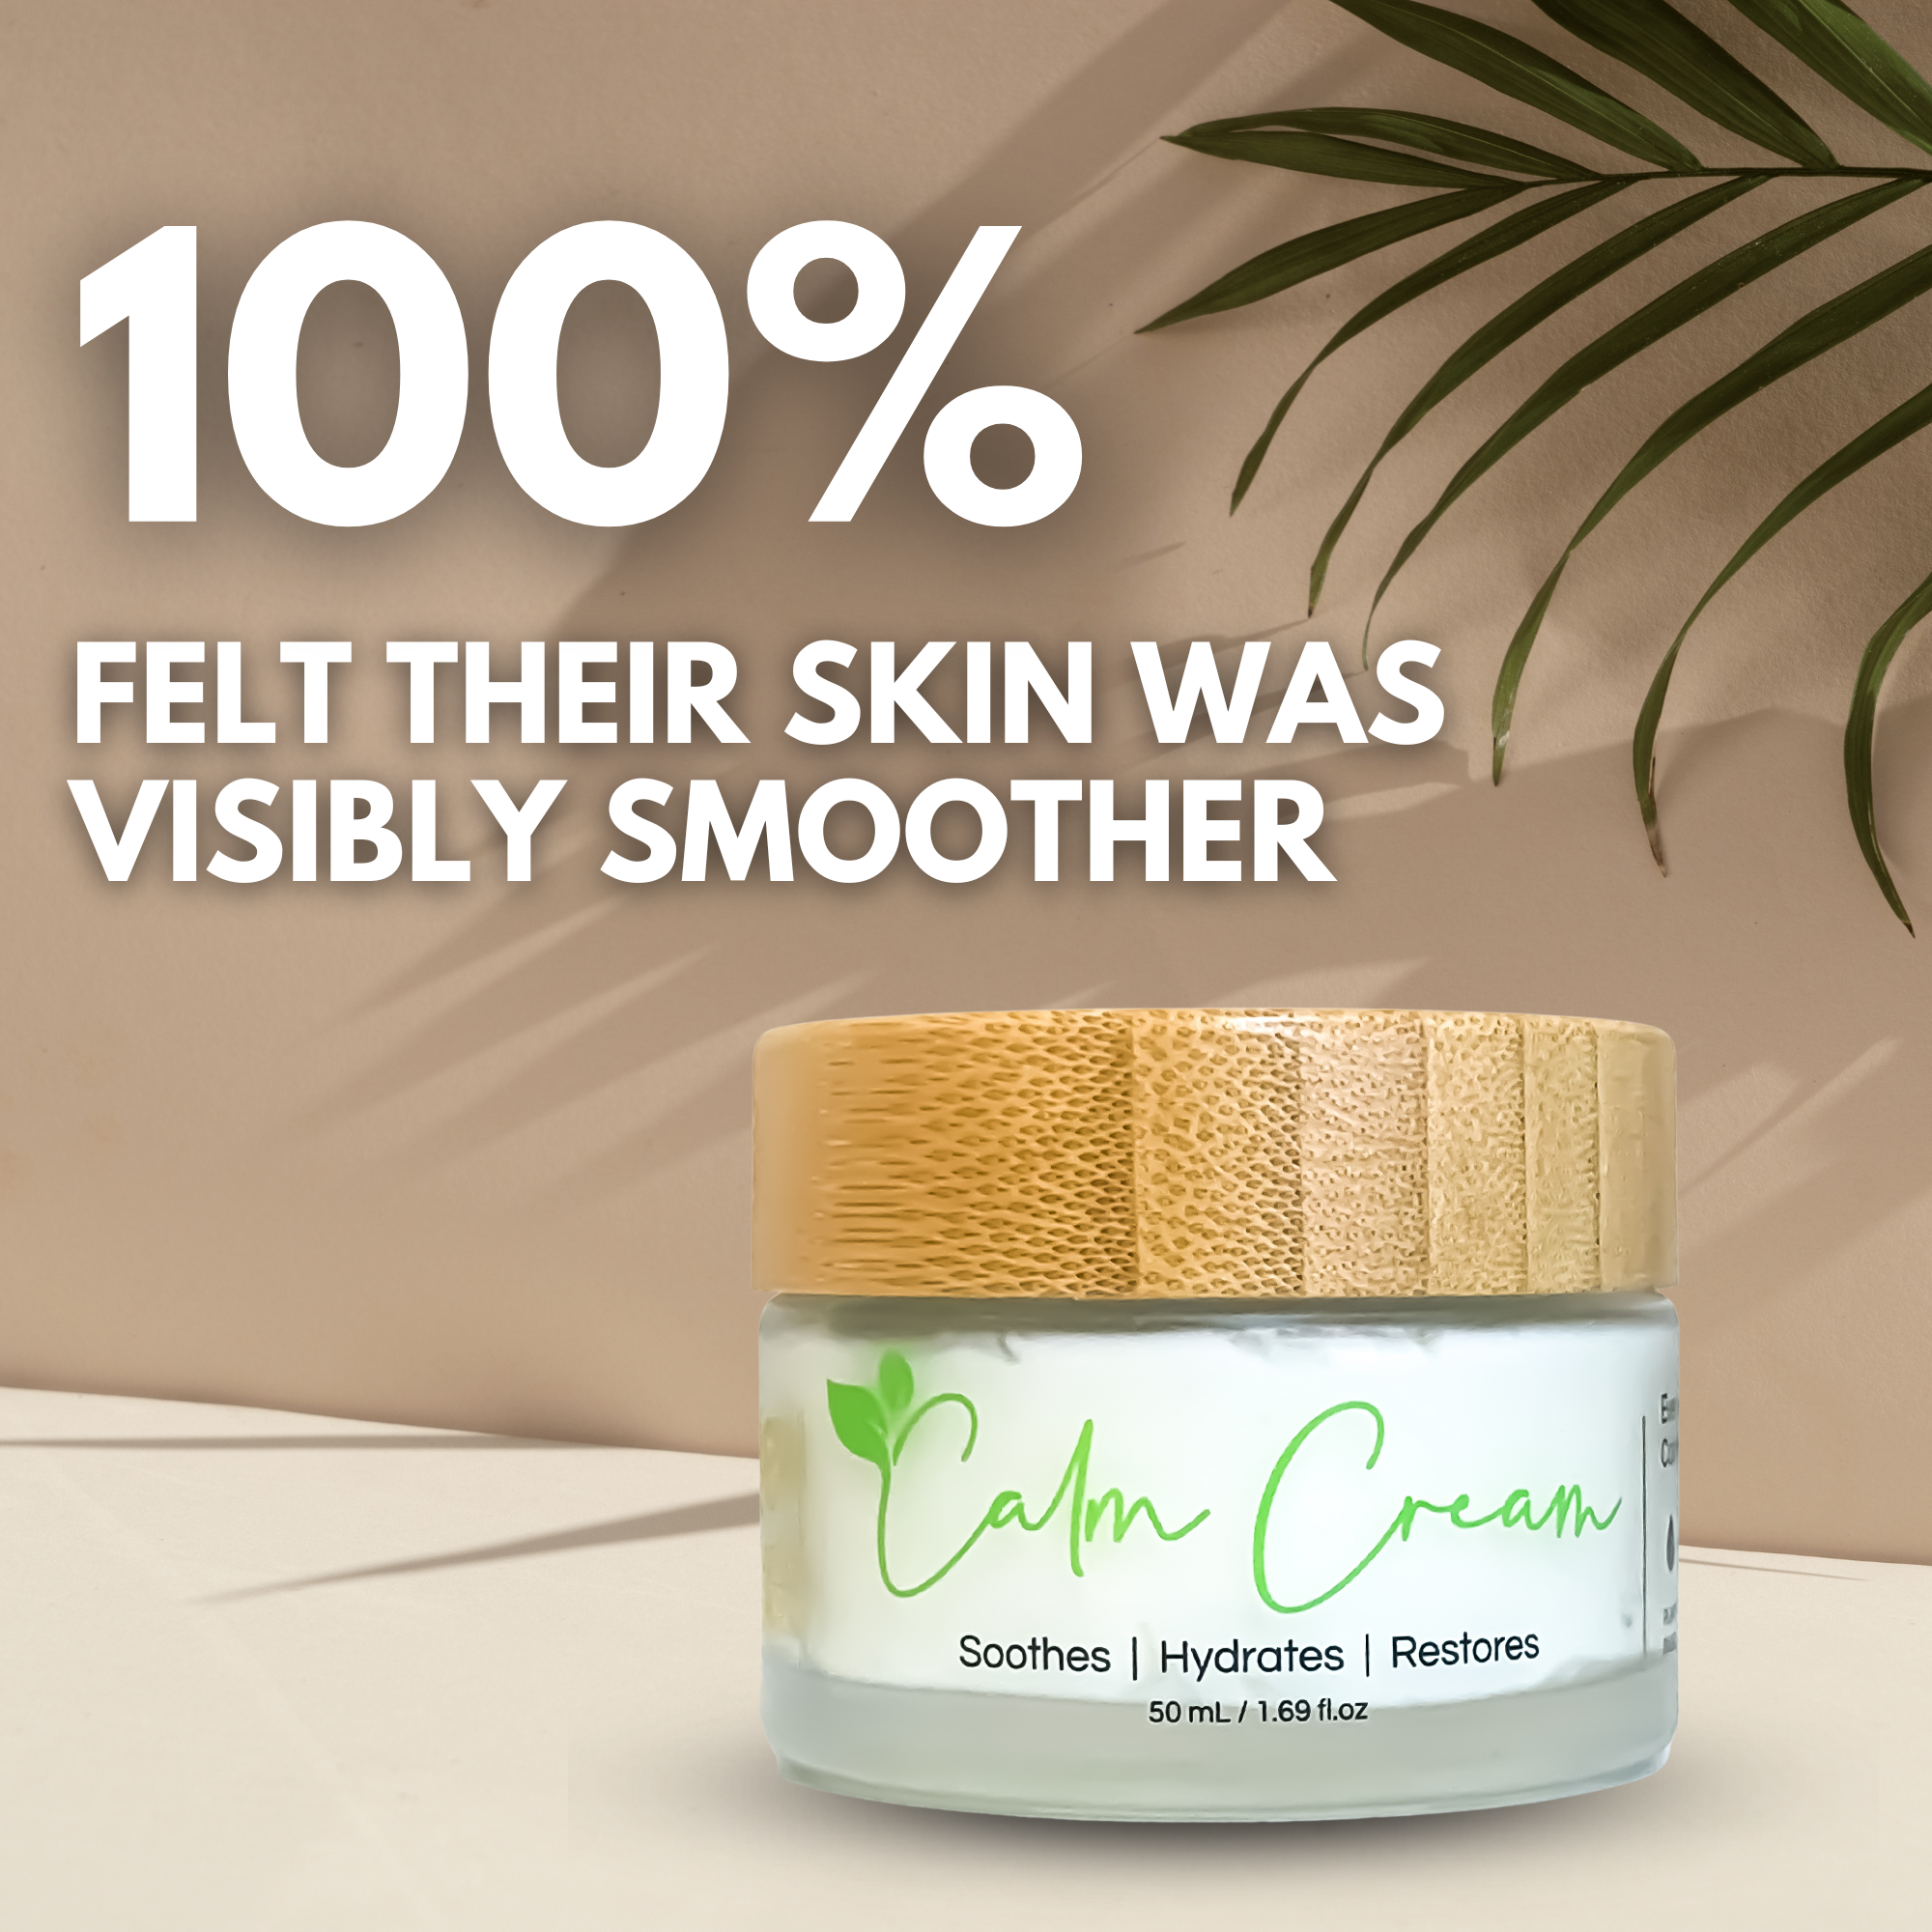 Calm Cream 50 mL Jar Testimonial 100% Felt Their Skin Was Visibly Smoother